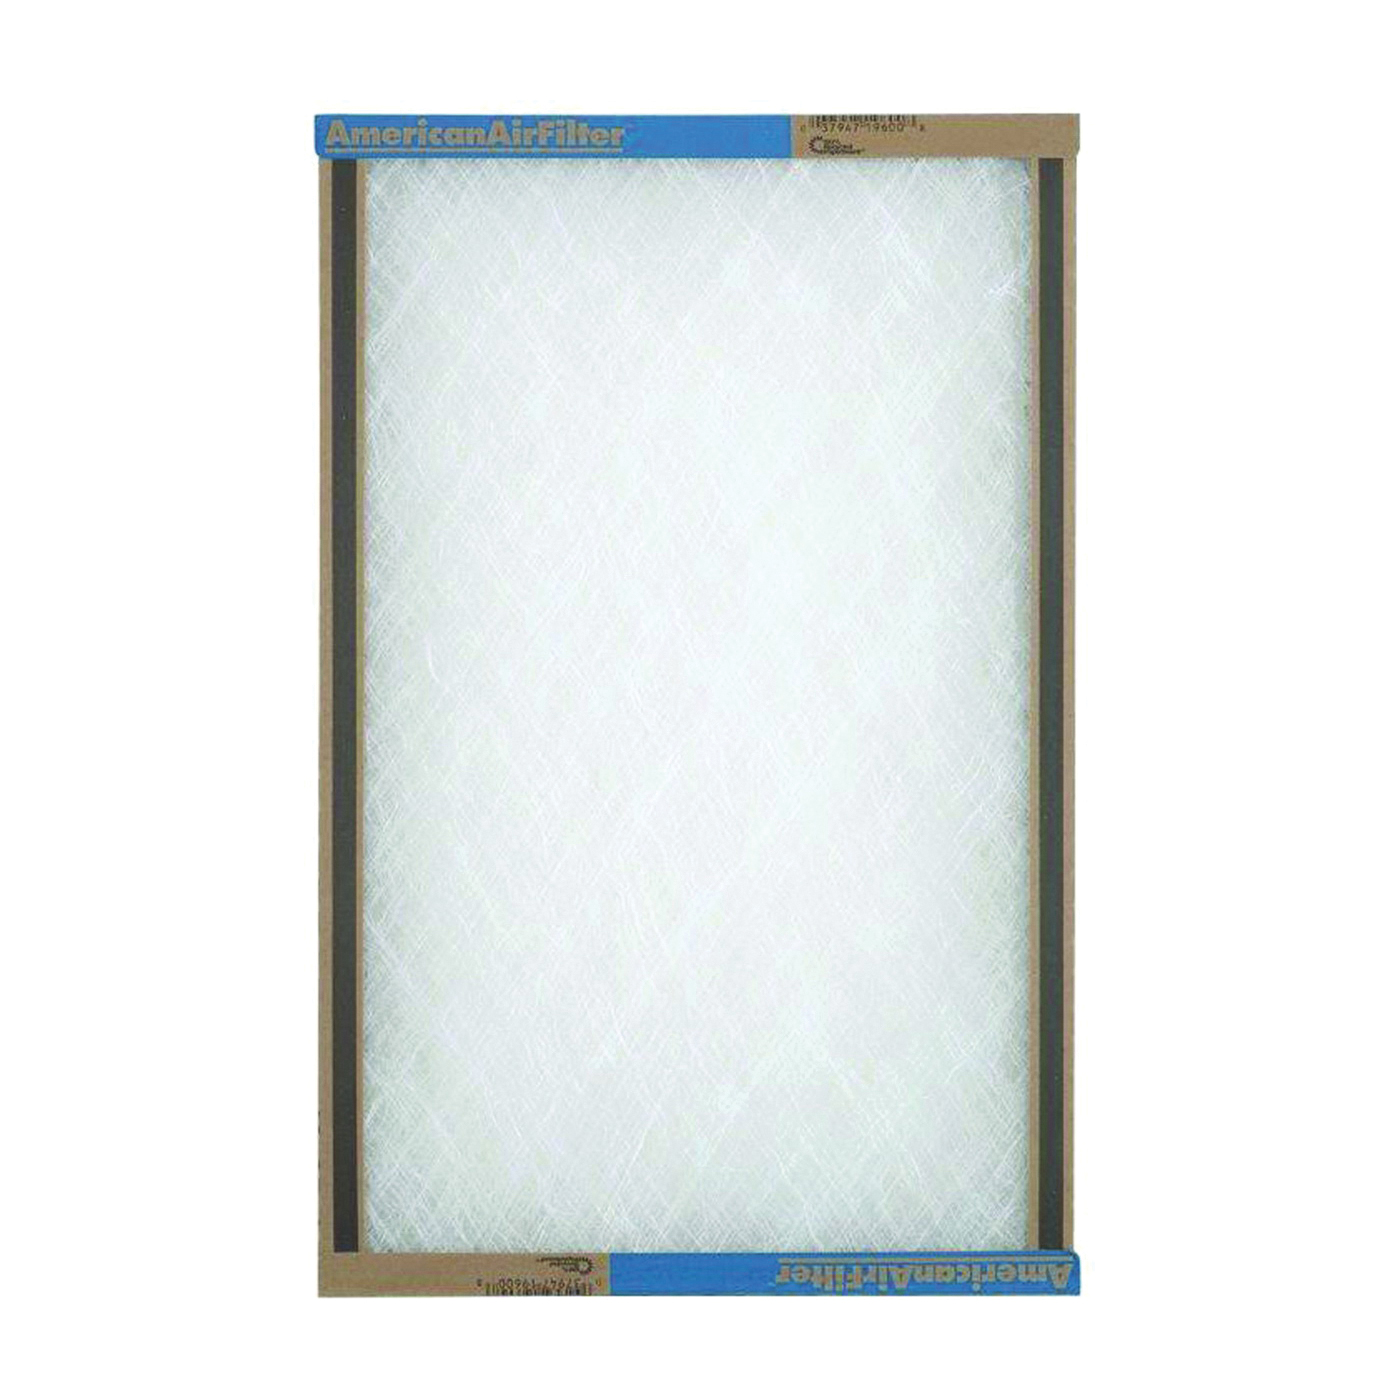 114241 Panel Air Filter, 24 x 14 x 1, Chipboard Frame